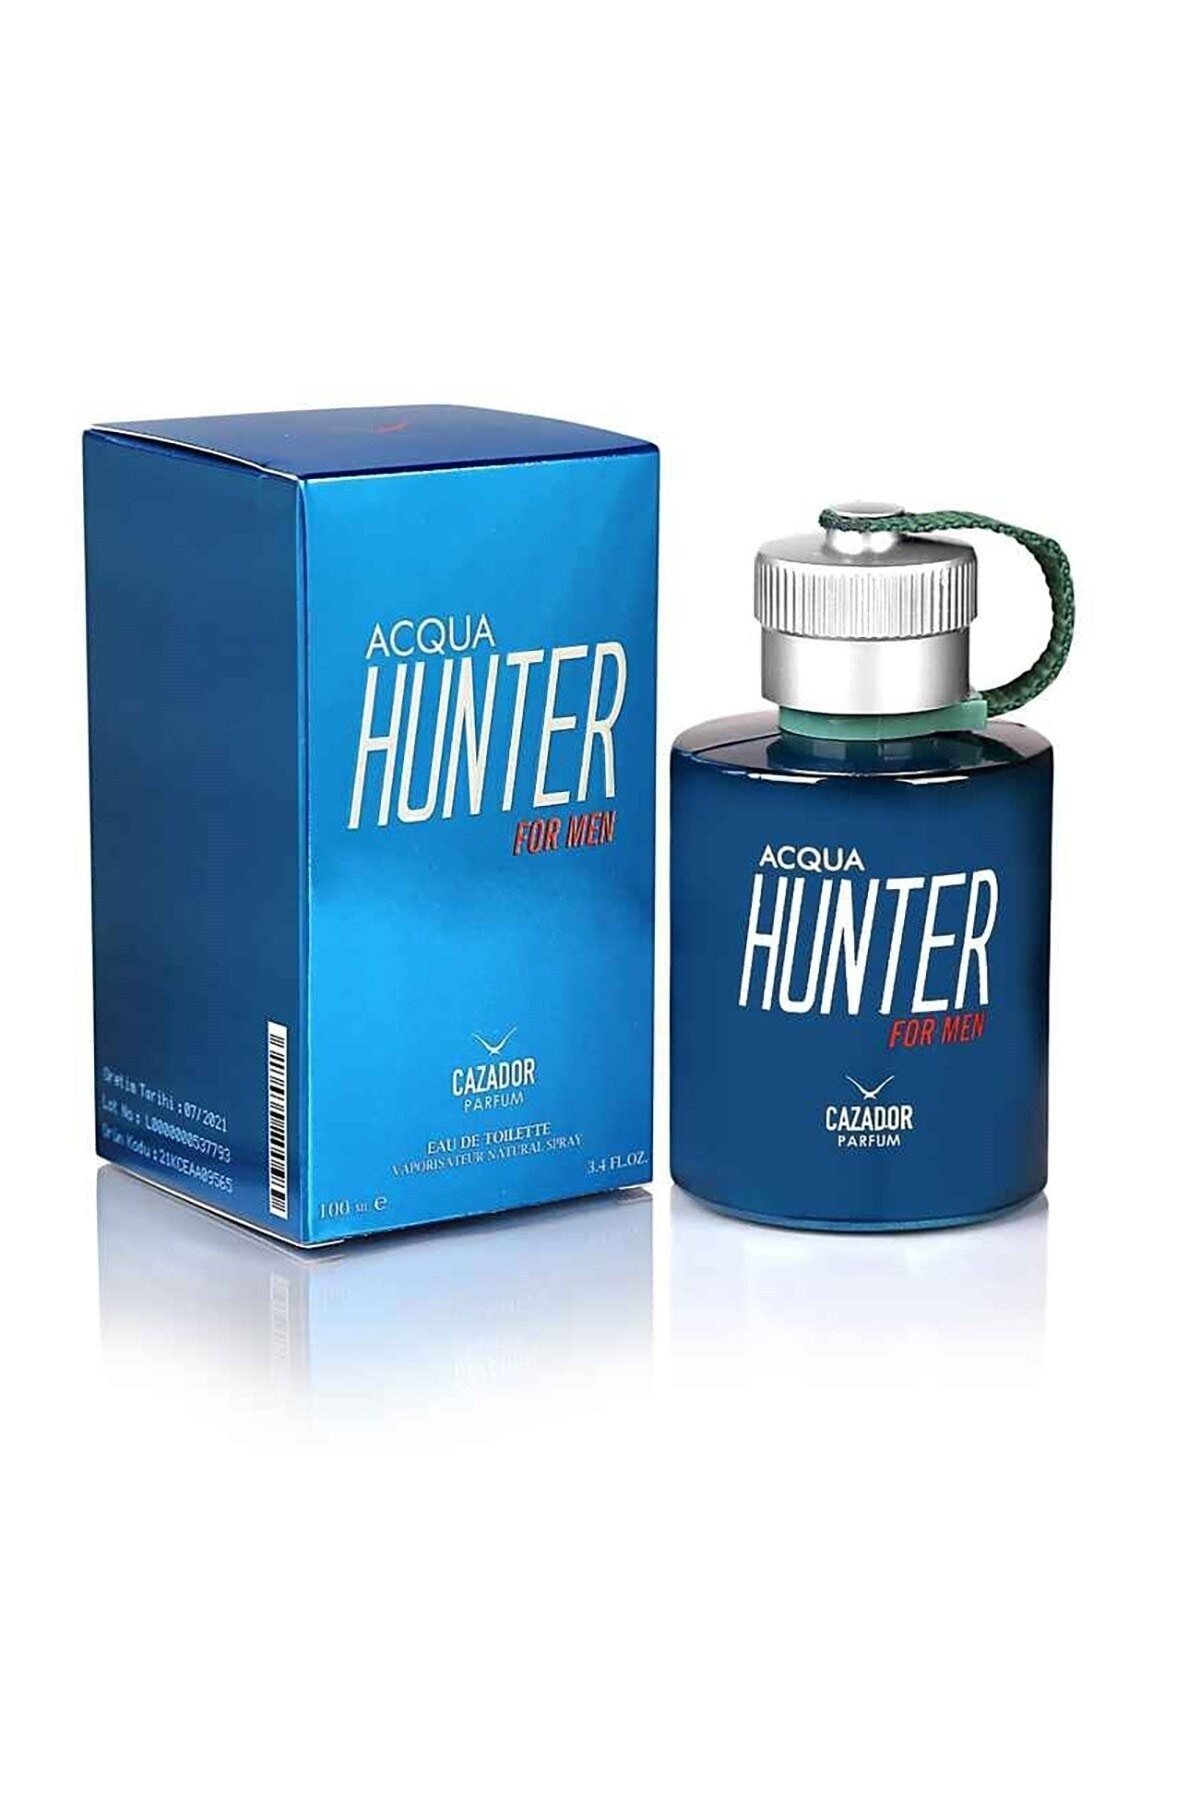 cazador erkek hunter 100cl parfüm 9575 l Agsmodasi